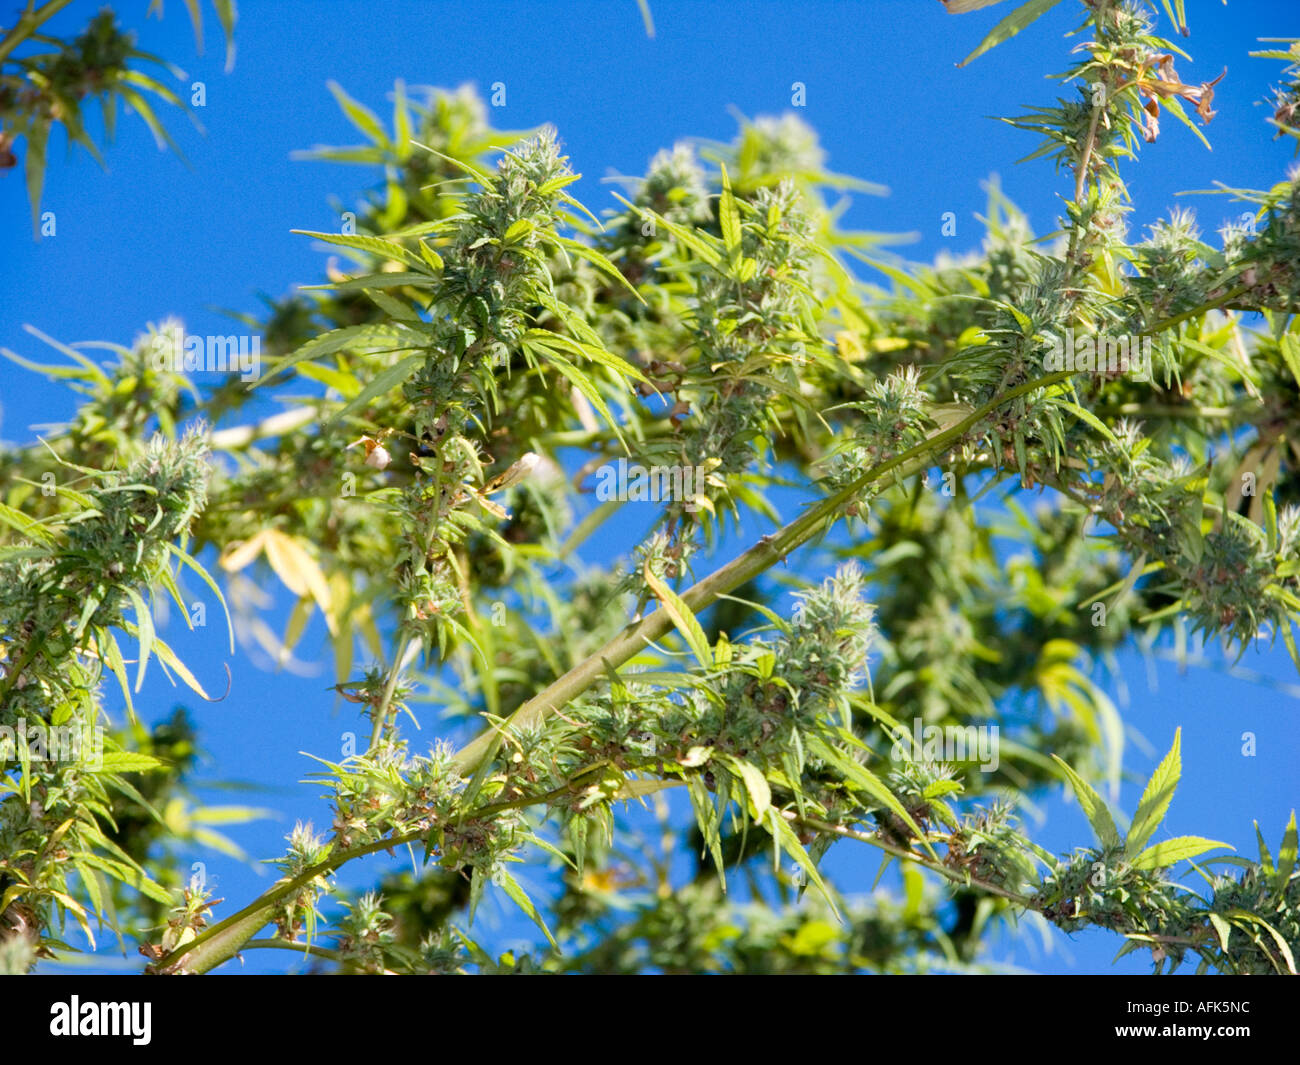 Piante di MARIJUANA nepalesi di cannabis cannabis sativa foglie verdi di canapa droghe stupefacenti vietato himalaya NEPAL plantage Himalaya dope Foto Stock